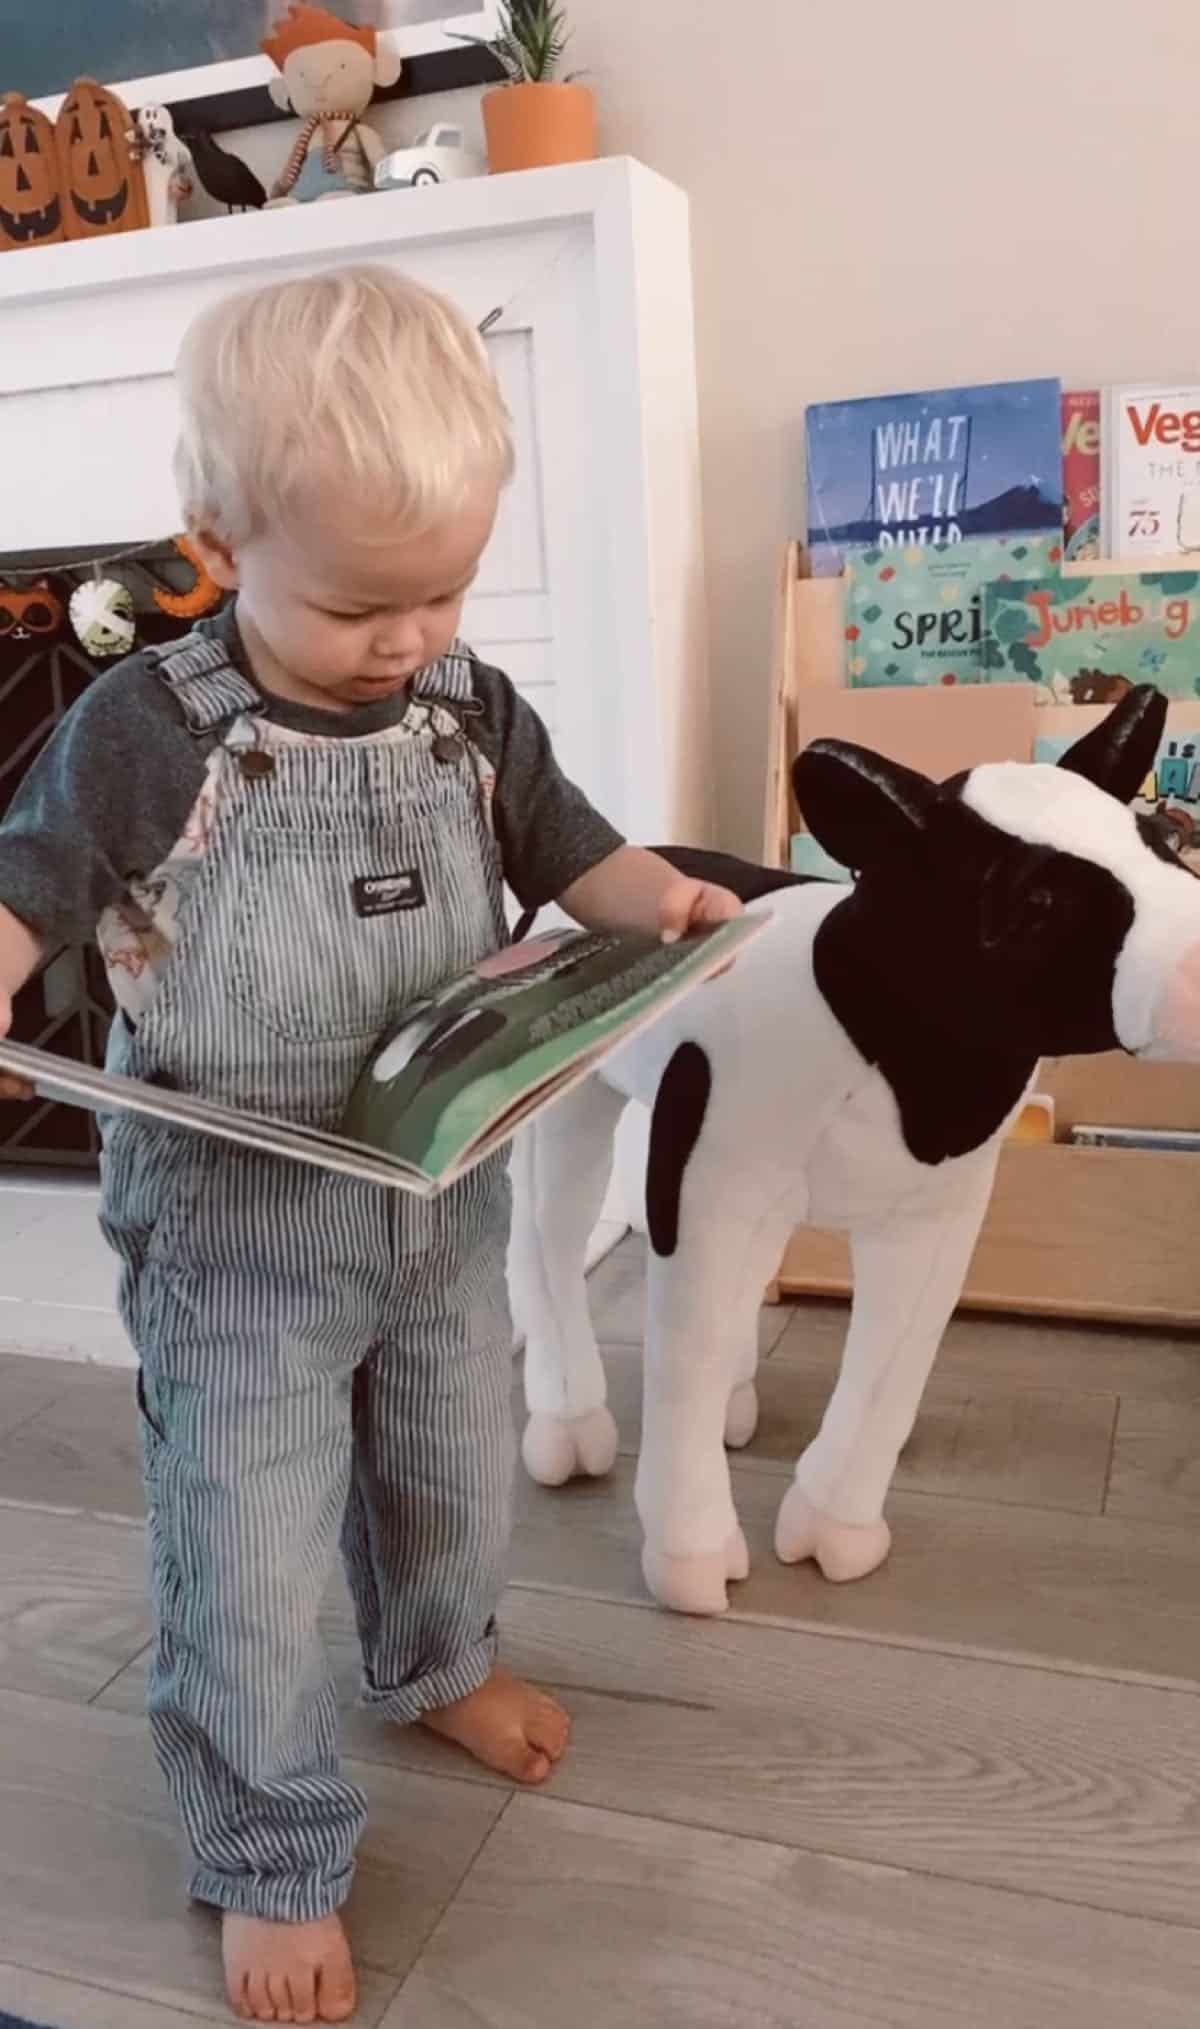 vegan kid reading a book to his stuffed animal cow